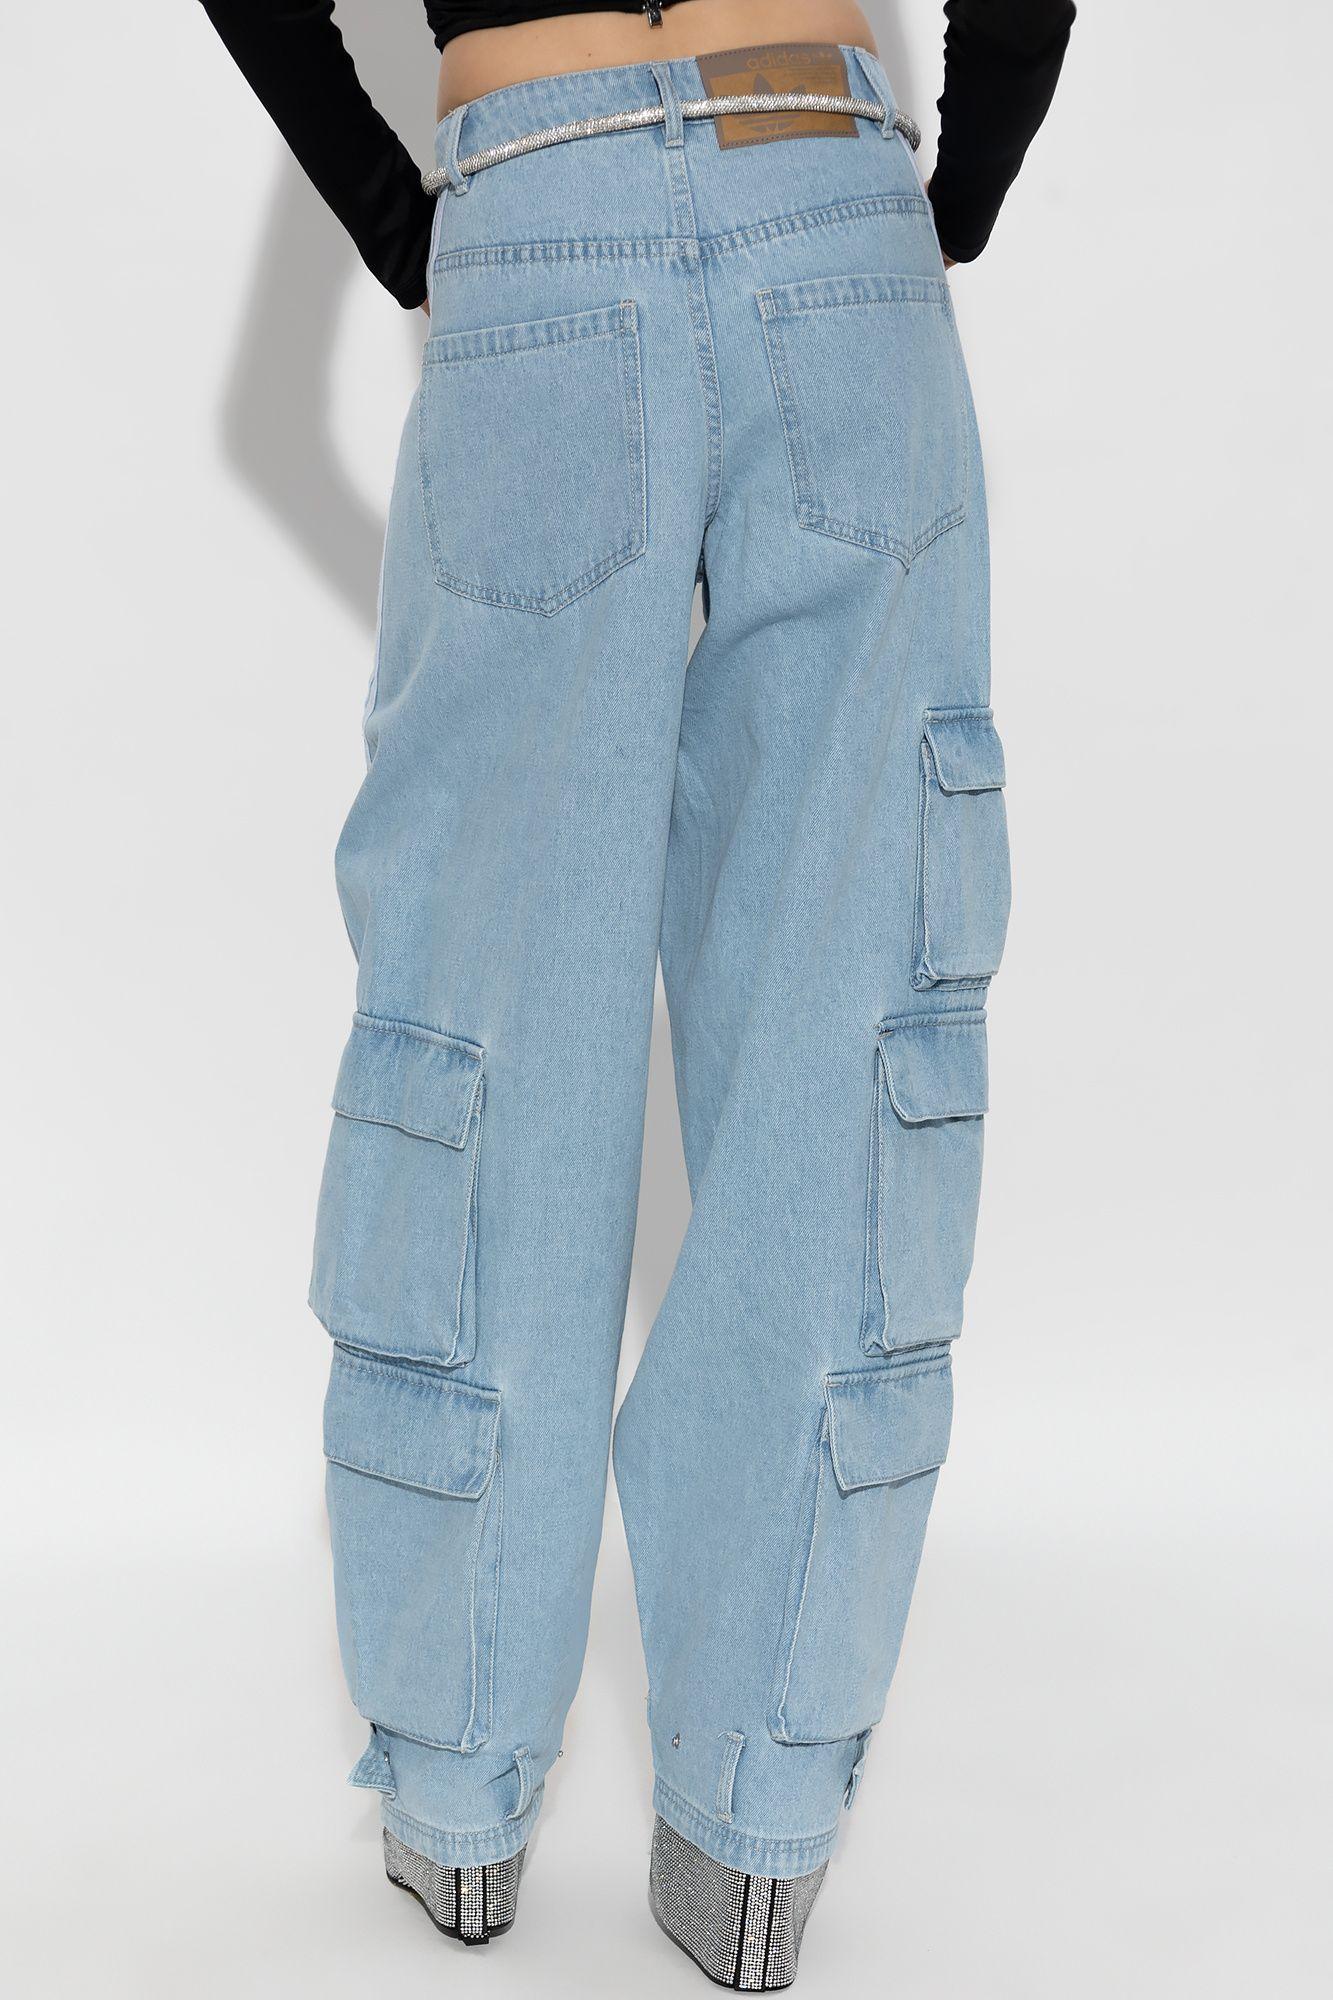 https://cdna.lystit.com/photos/vitkac/b78d247d/adidas-originals-light-blue-Cargo-Jeans.jpeg